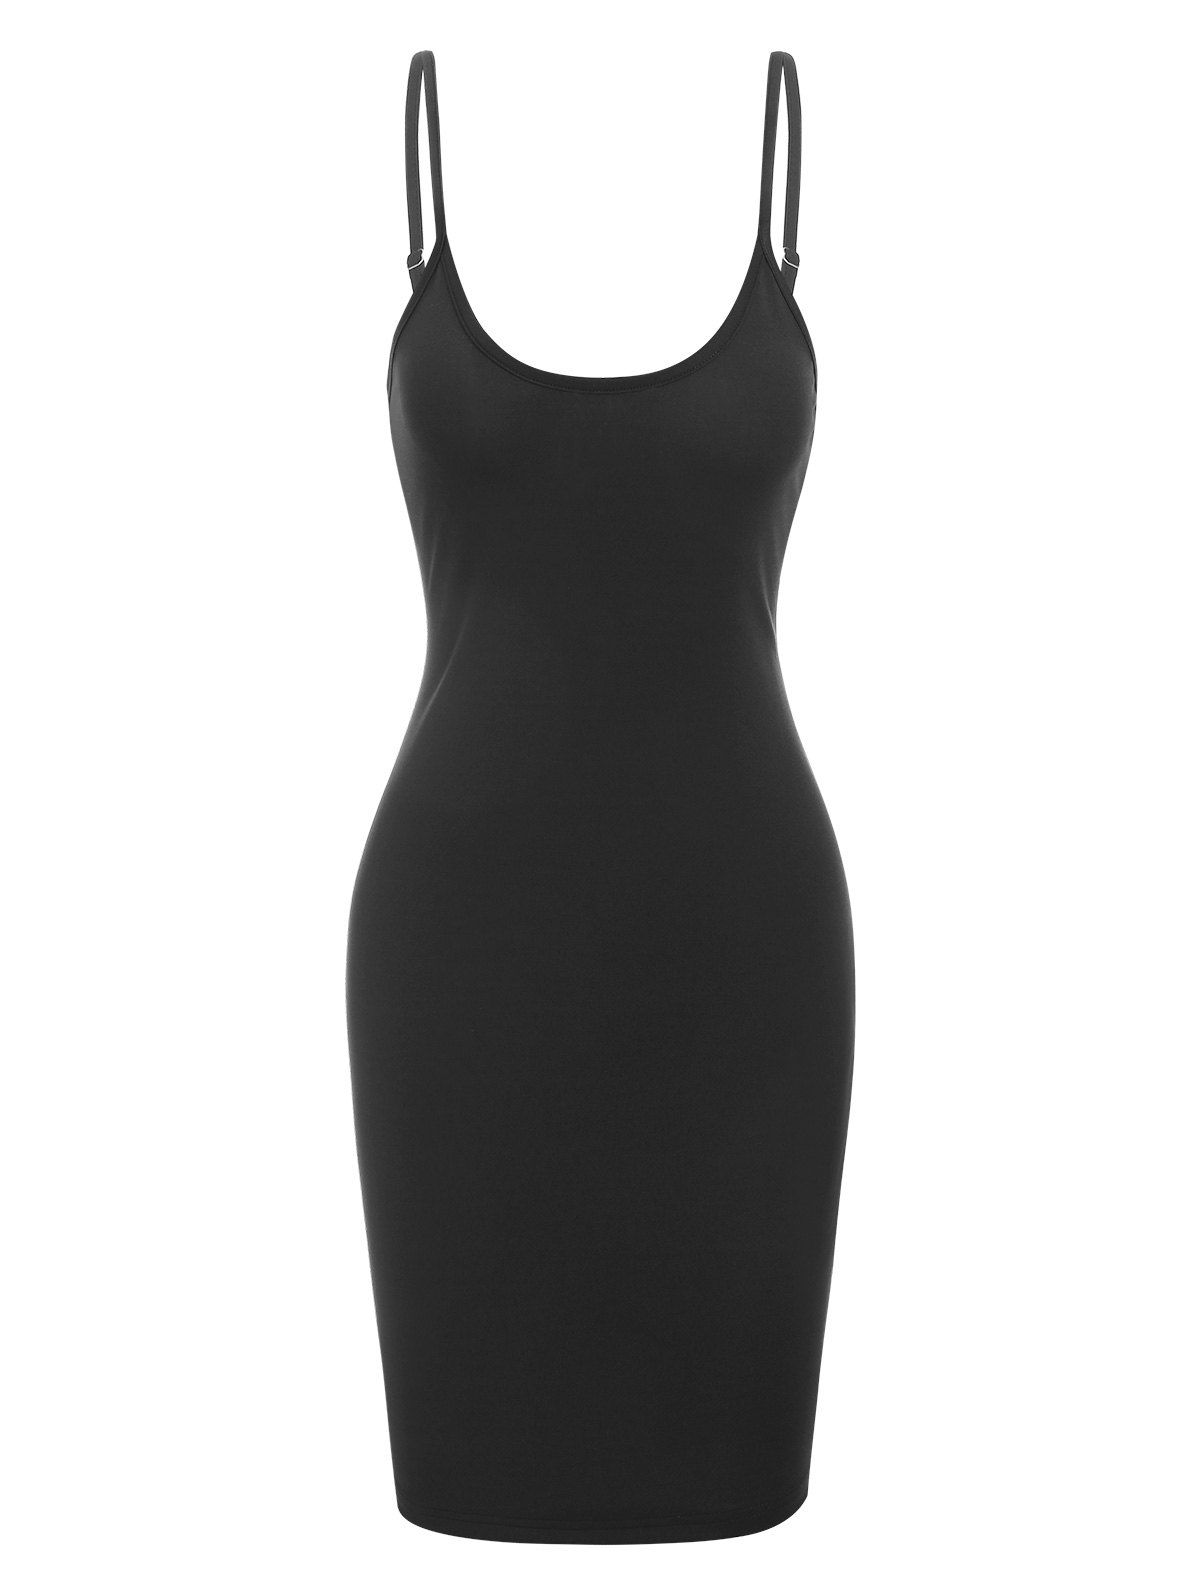 Spaghetti Strap Plain Mini Bodycon Dress - BLACK XXXL